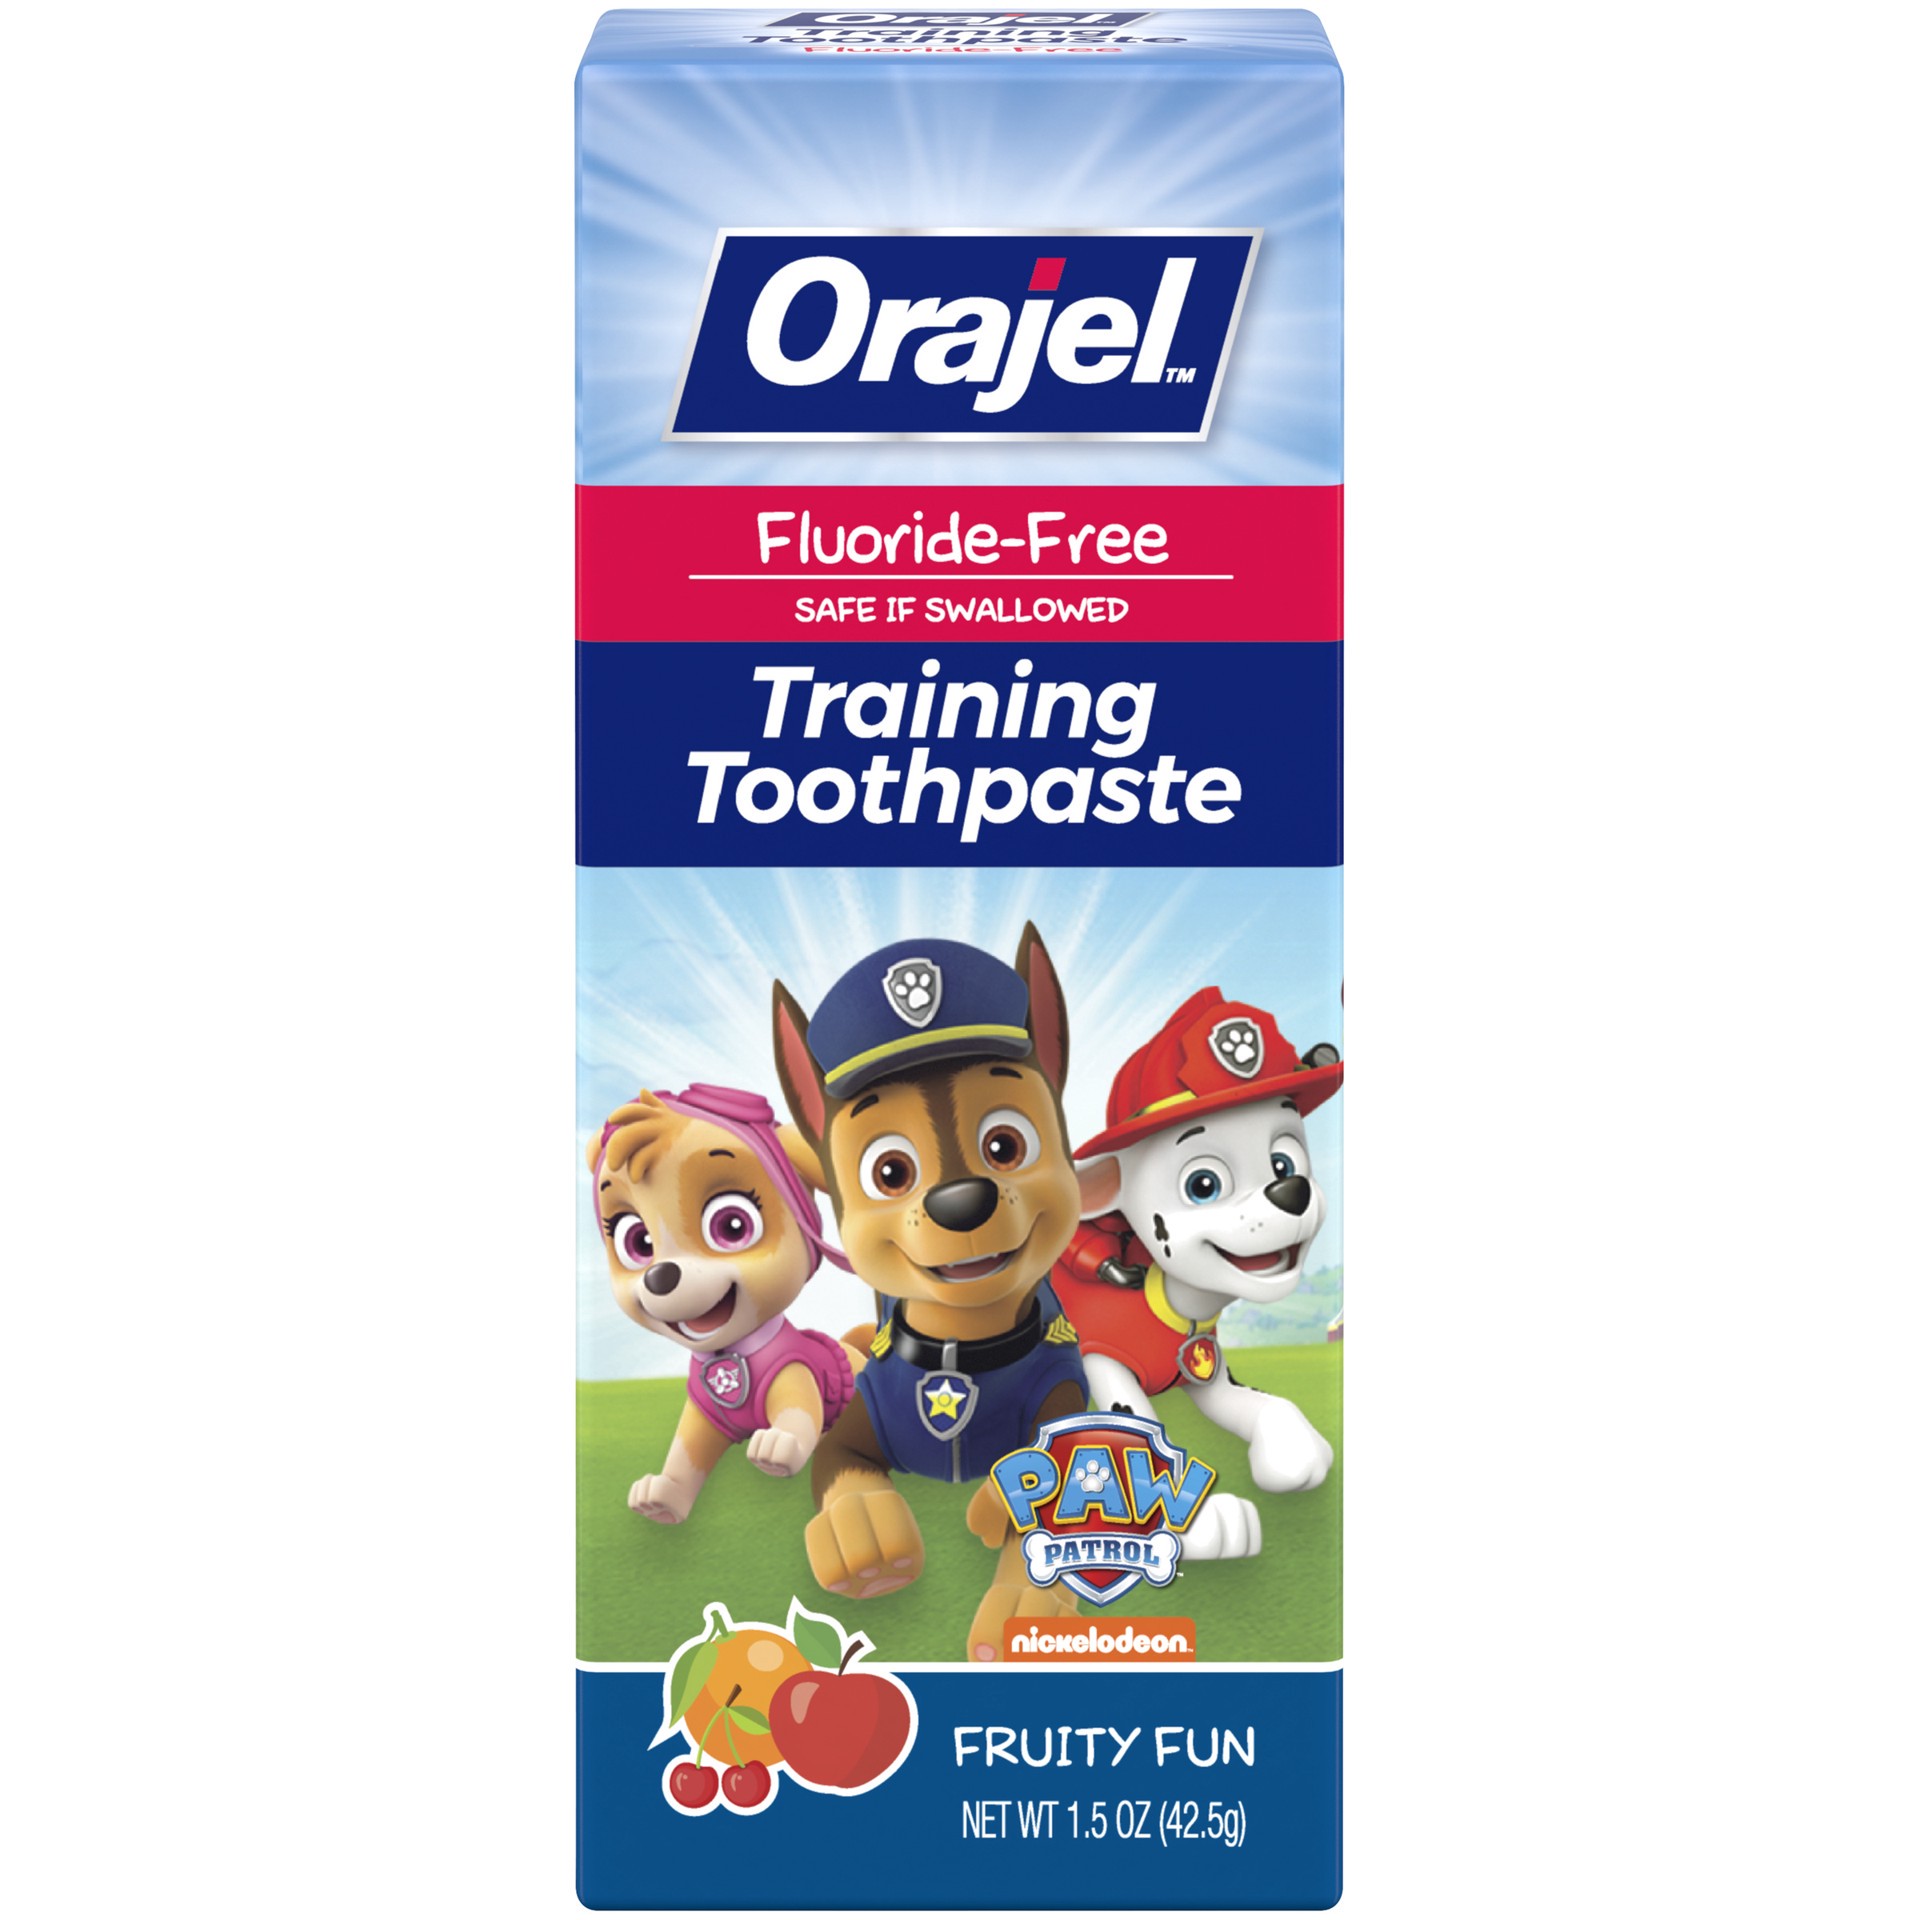 slide 1 of 9, Orajel Paw Patrol Fluoride-Free Training Toothpaste, Fruity Fun Flavor, One 1.5oz Tube: Orajel #1 Pediatrician Recommended Brand for Kids Non-Fluoride Toothpaste, 1.5 oz